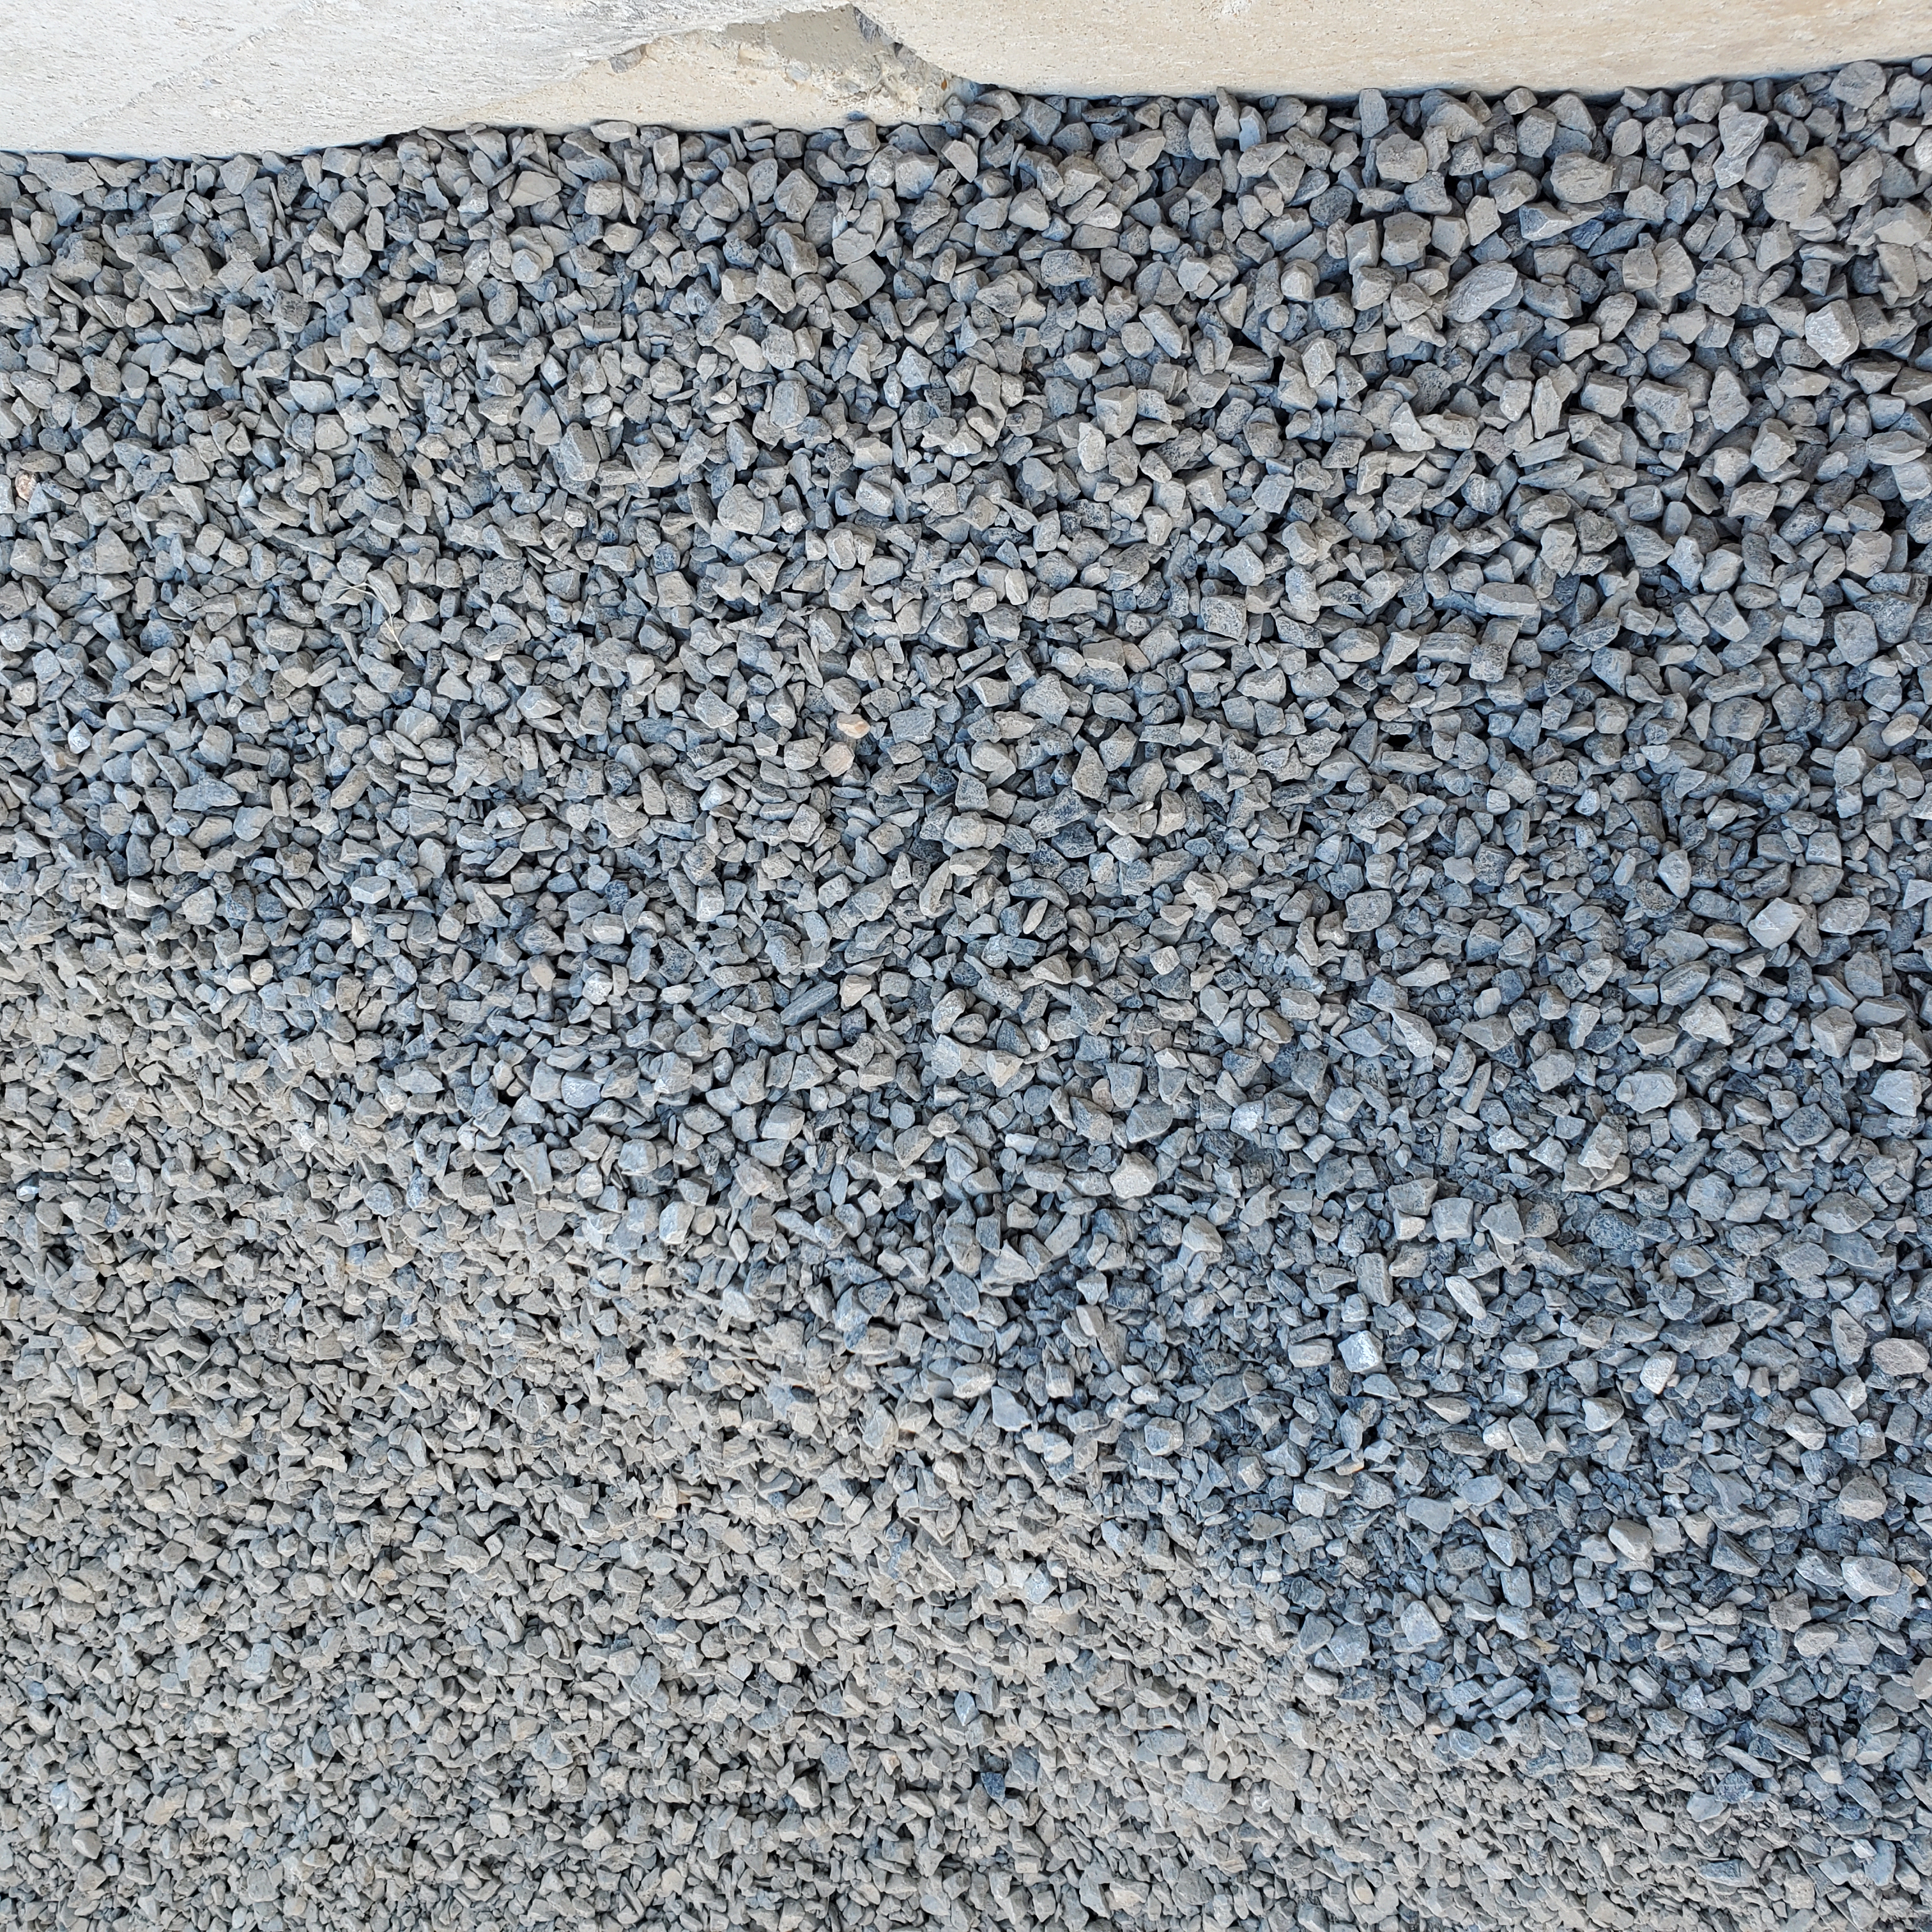 Black Crushed Granite - Tejas Black